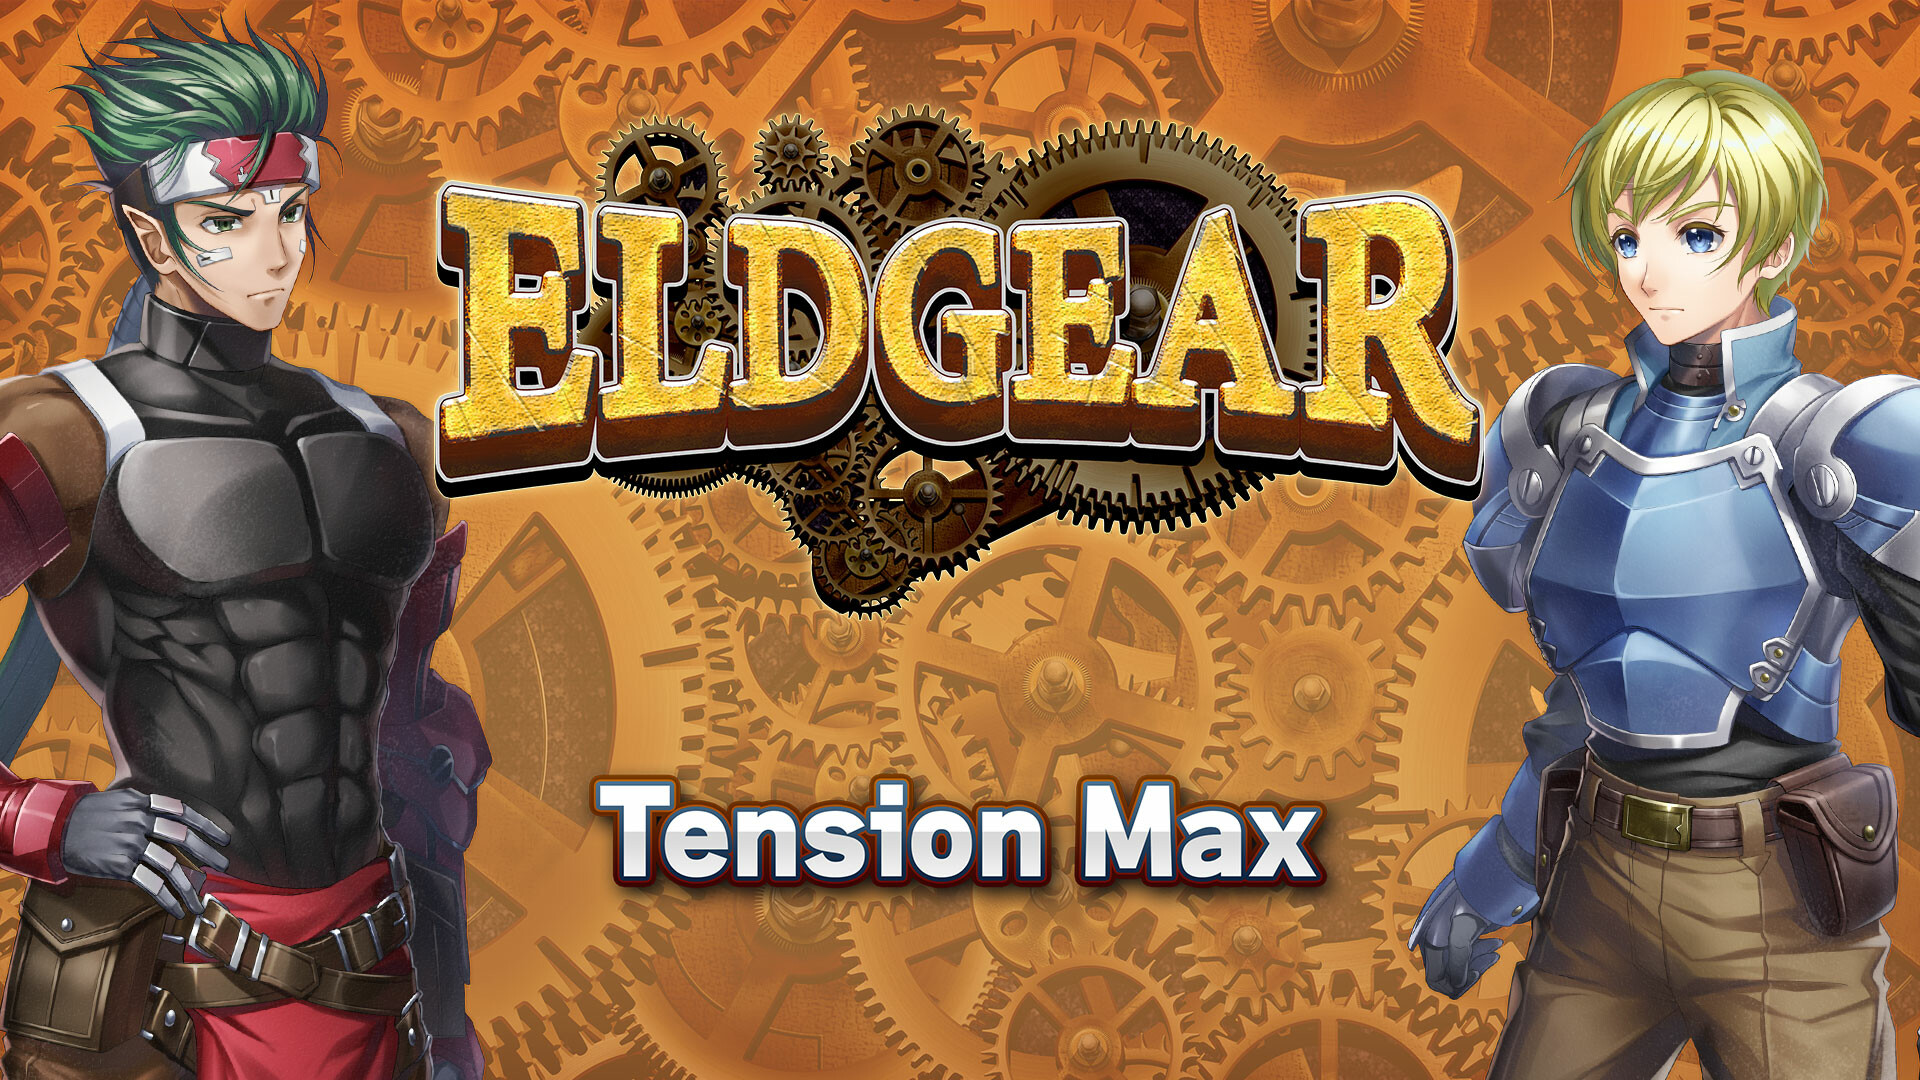 Tension Max - Eldgear Featured Screenshot #1